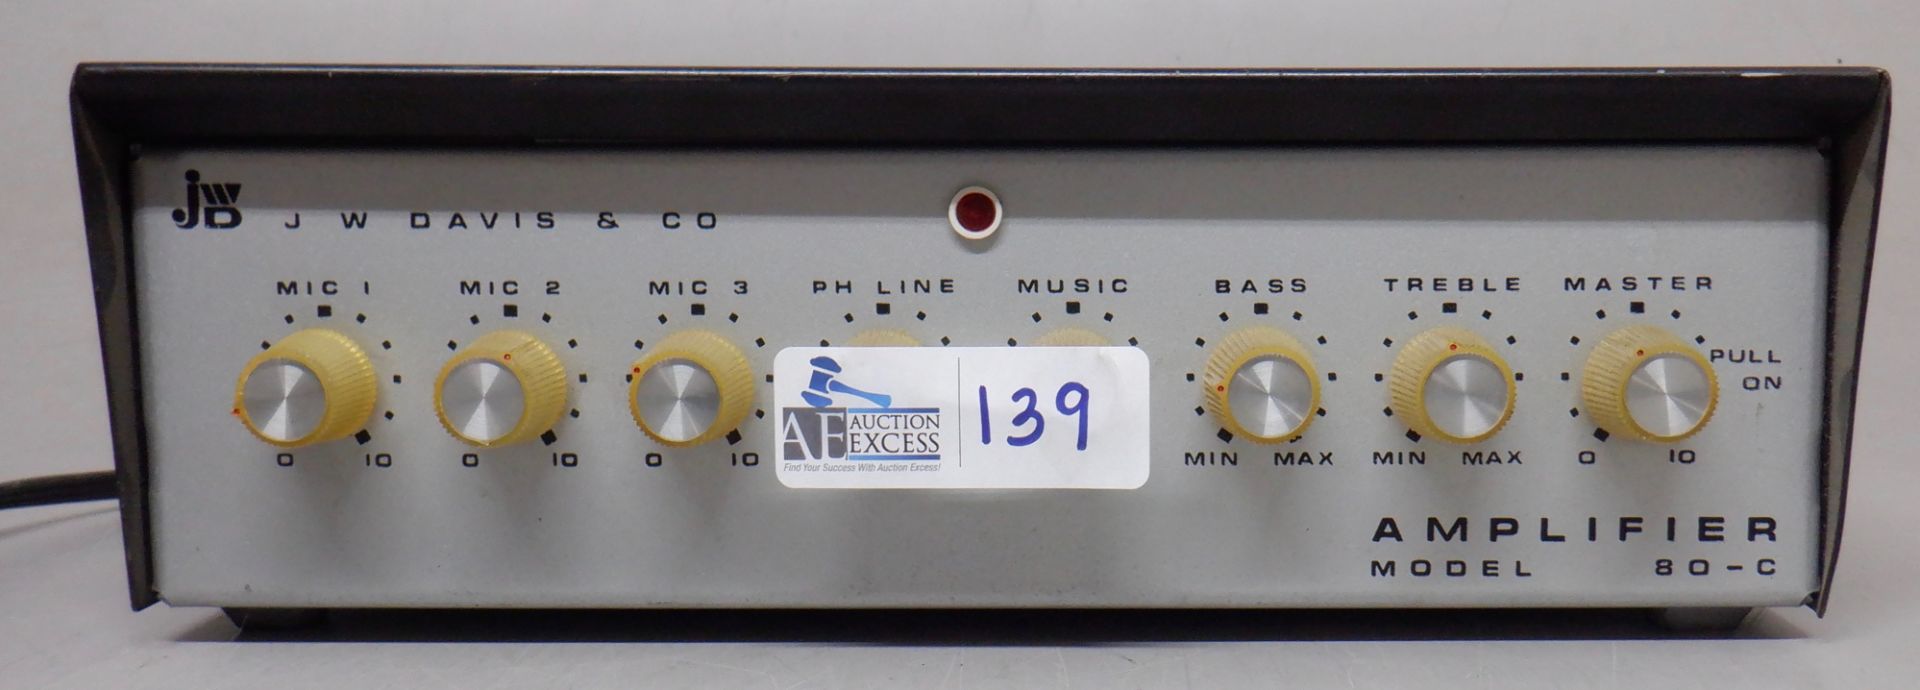 JW DAVIS &CO 80-C AMP